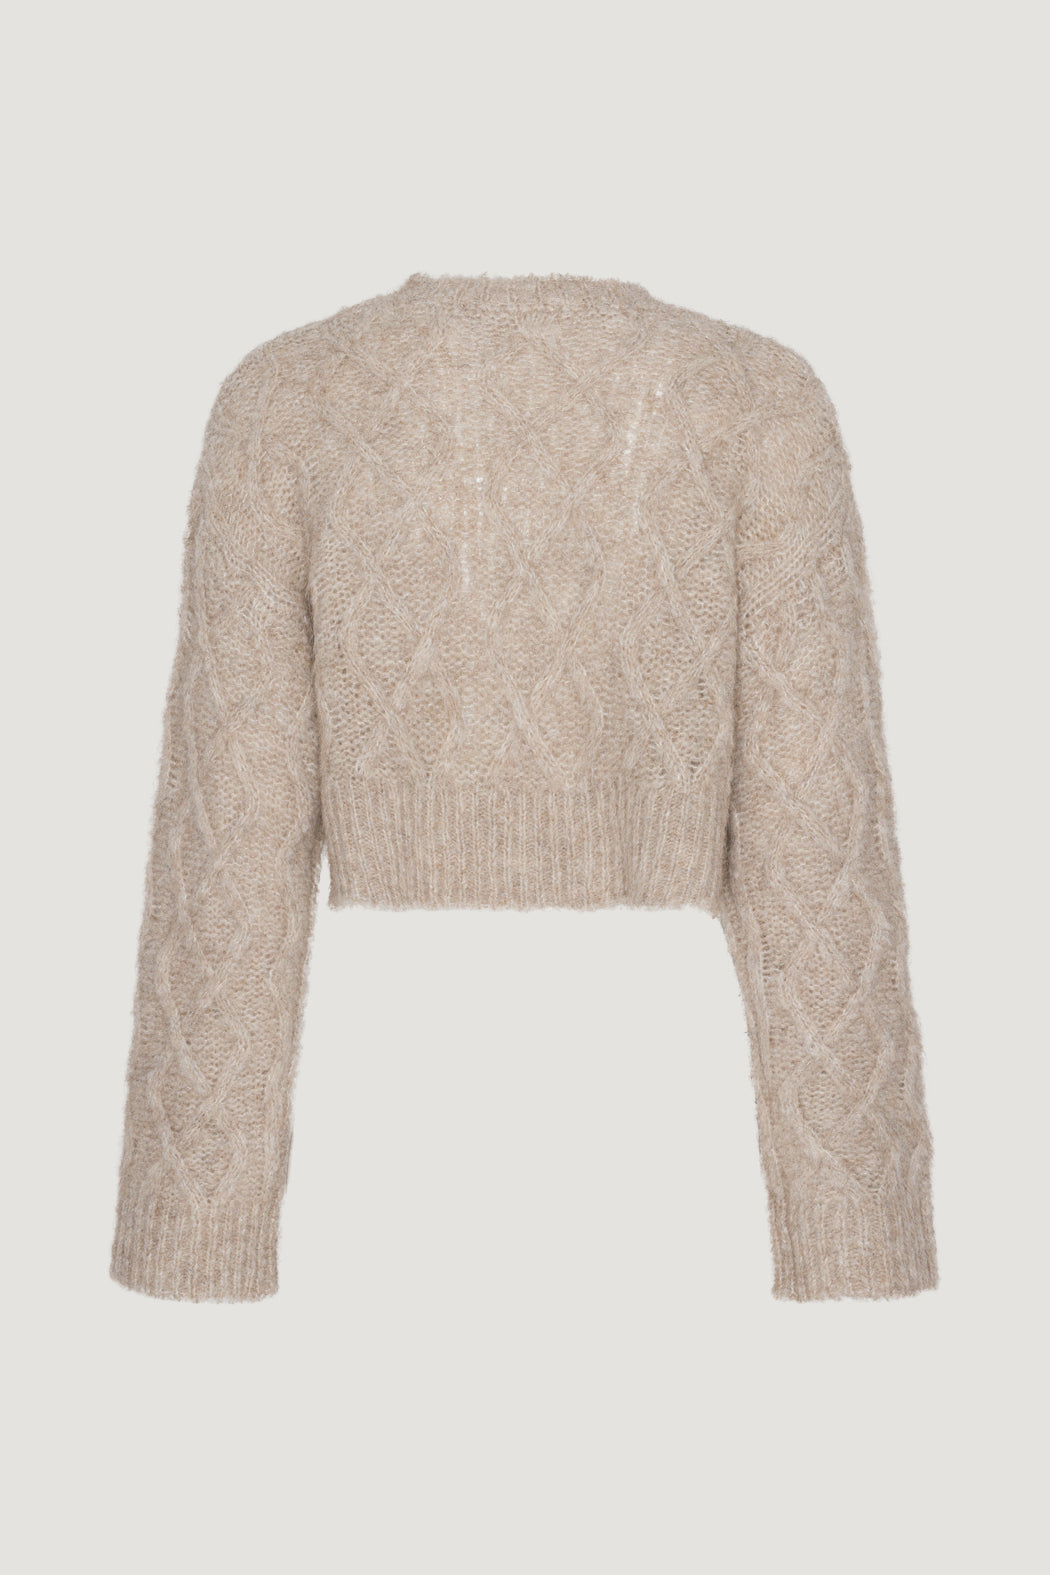 Remain Knit Melange Sweater